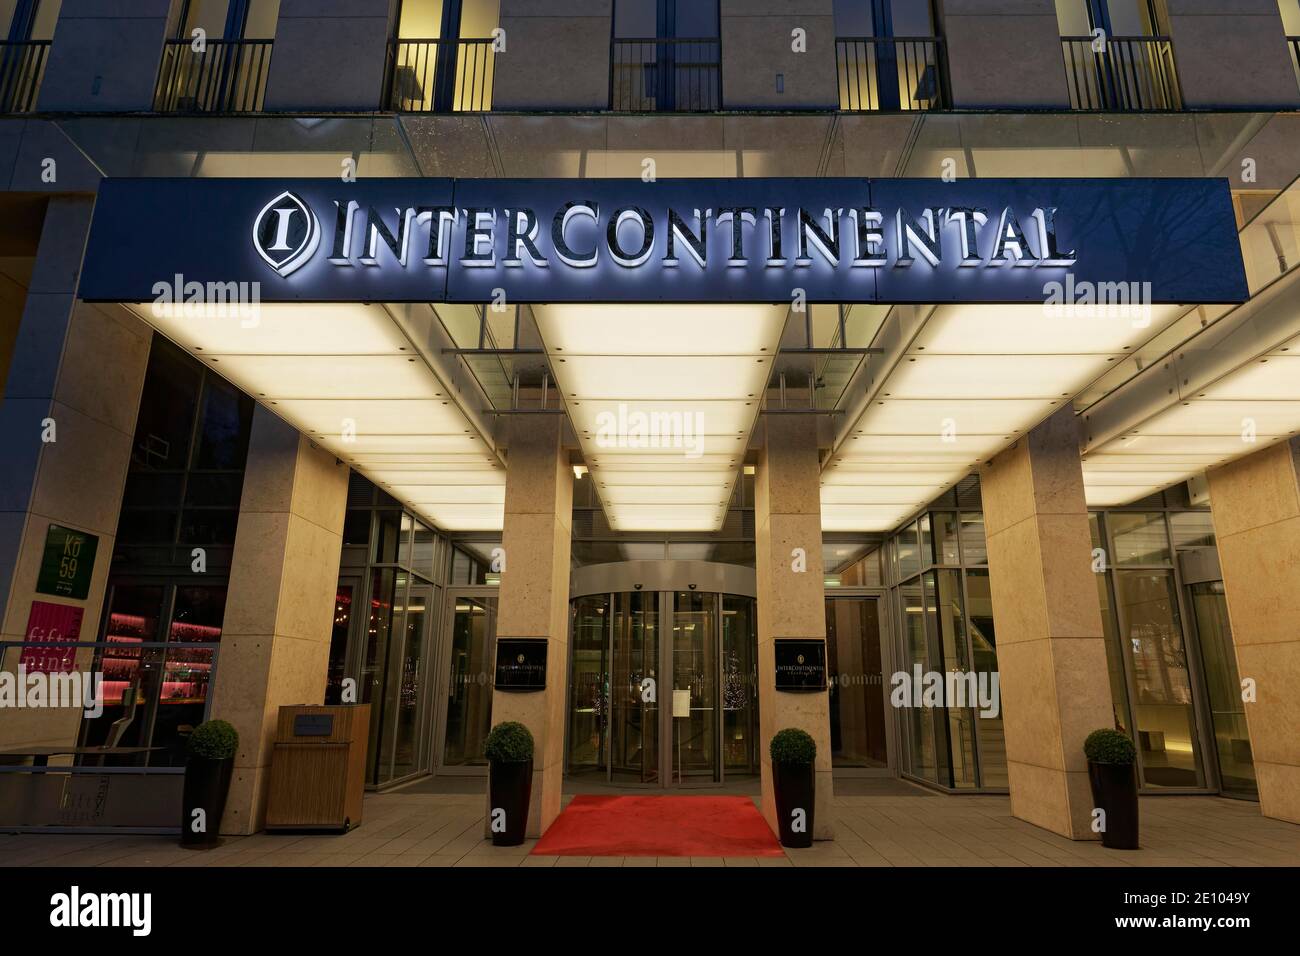 Hotel Intercontinental, illuminated entrance with logo, Königsallee, Düsseldorf, North Rhine-Westphalia, Germany, Europe Stock Photo